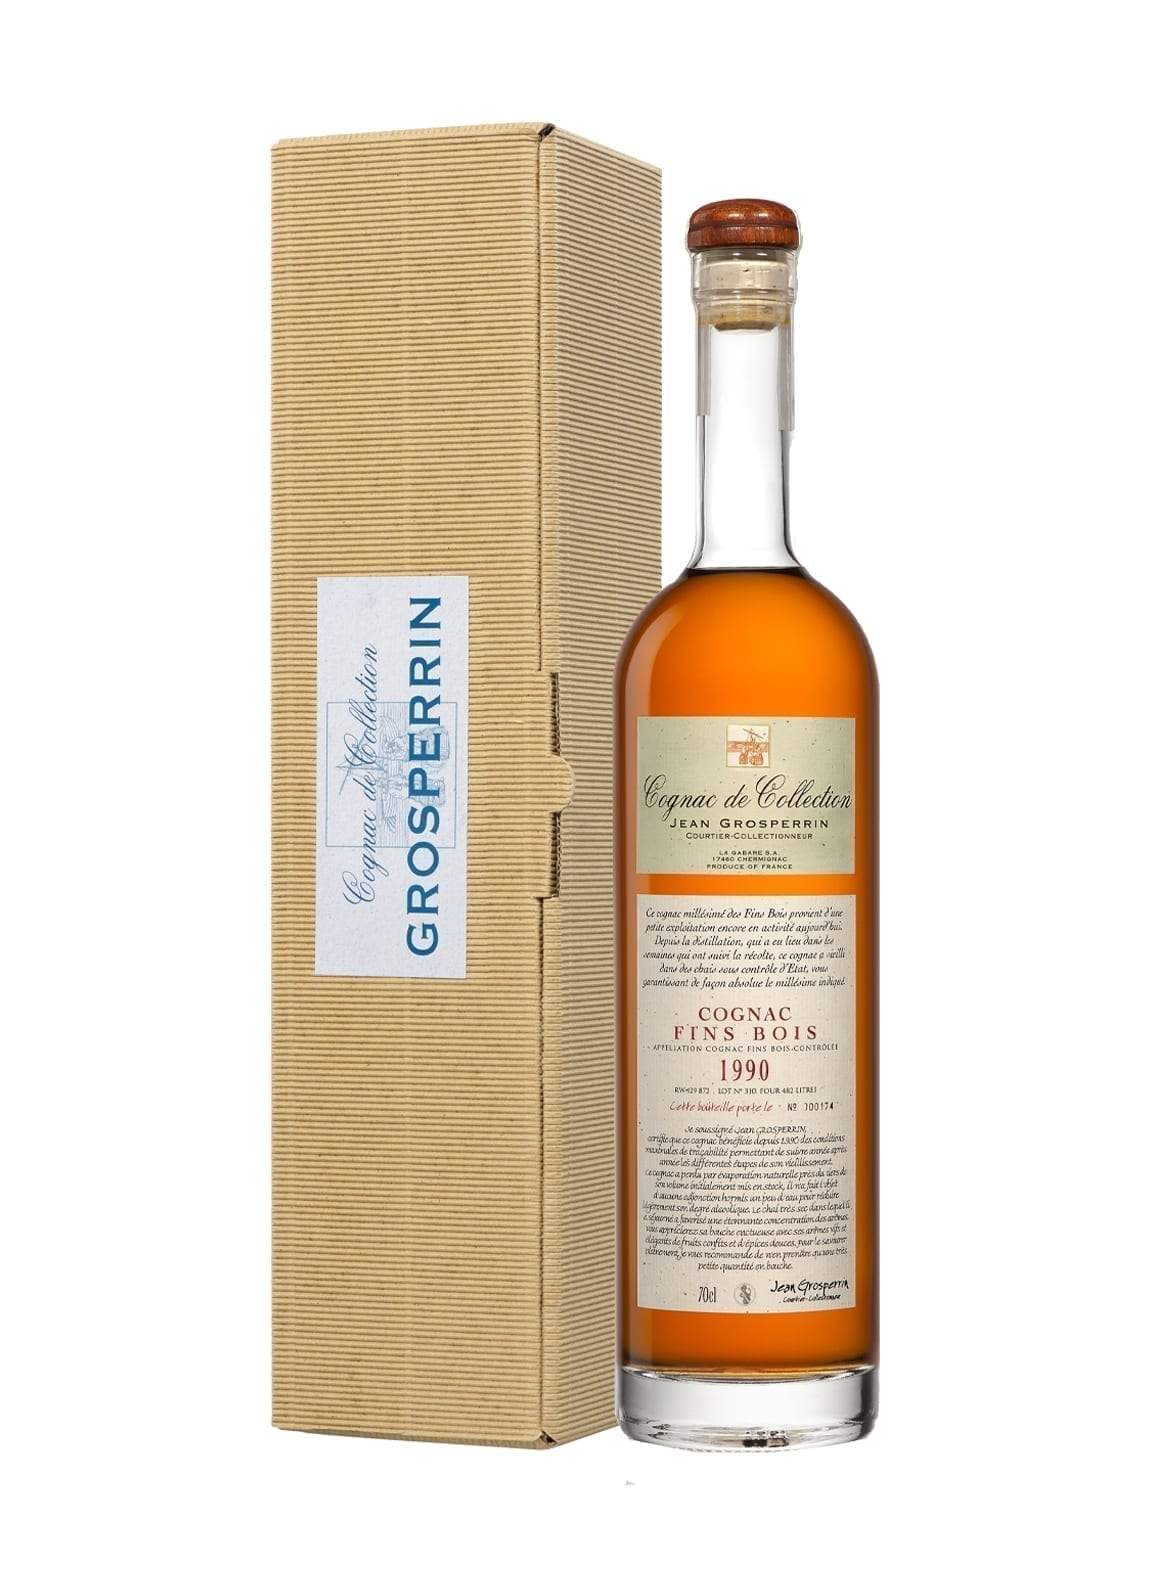 Grosperrin Cognac 1990 Fin Bois 45.7% 700ml | Brandy | Shop online at Spirits of France